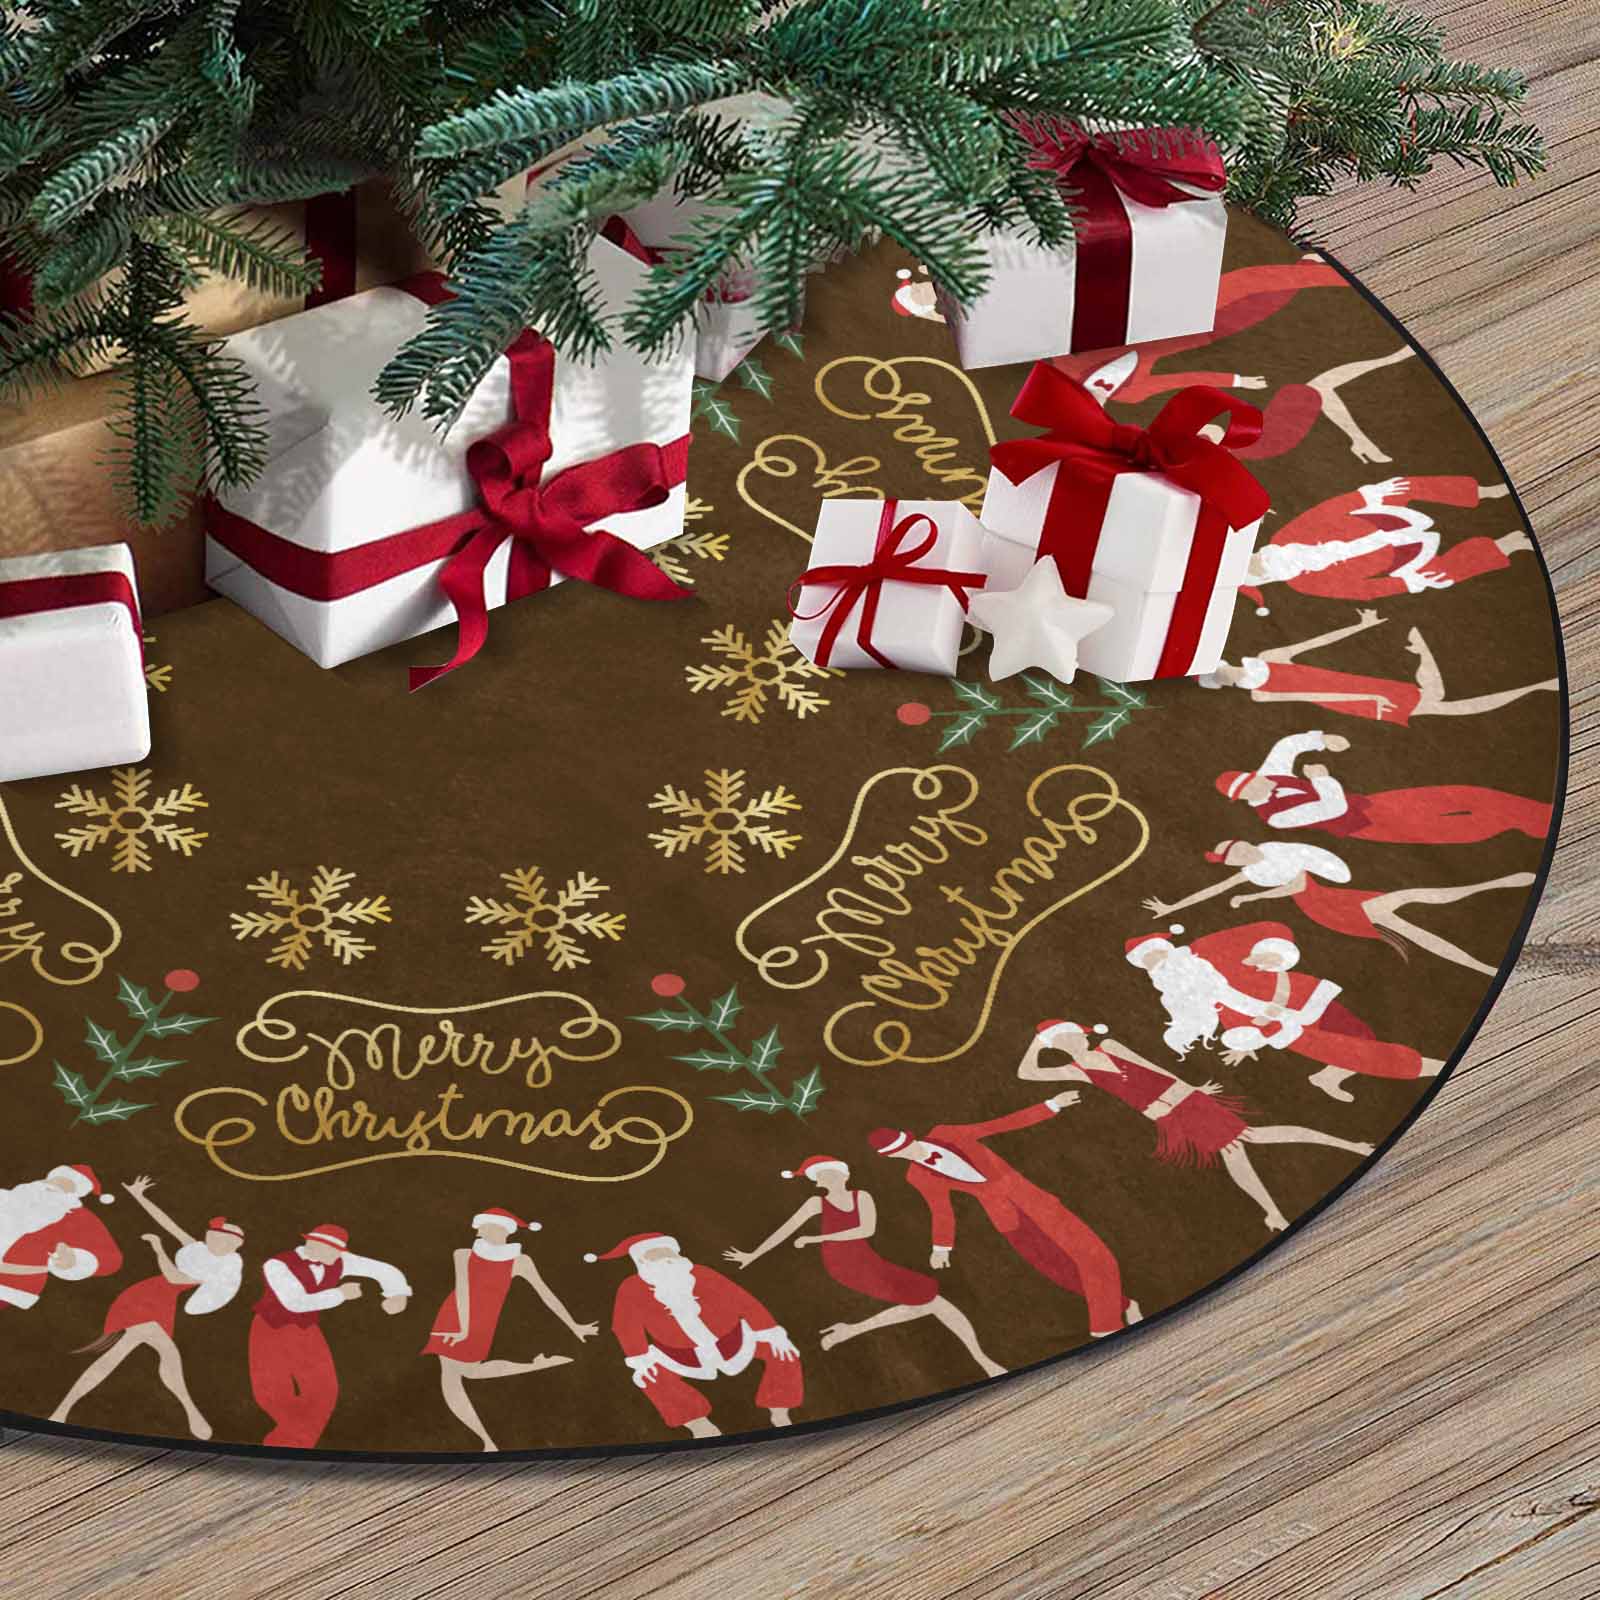 Christmas Tree Skirt, Decoration For Christmas Tree, Santa Claus Dance